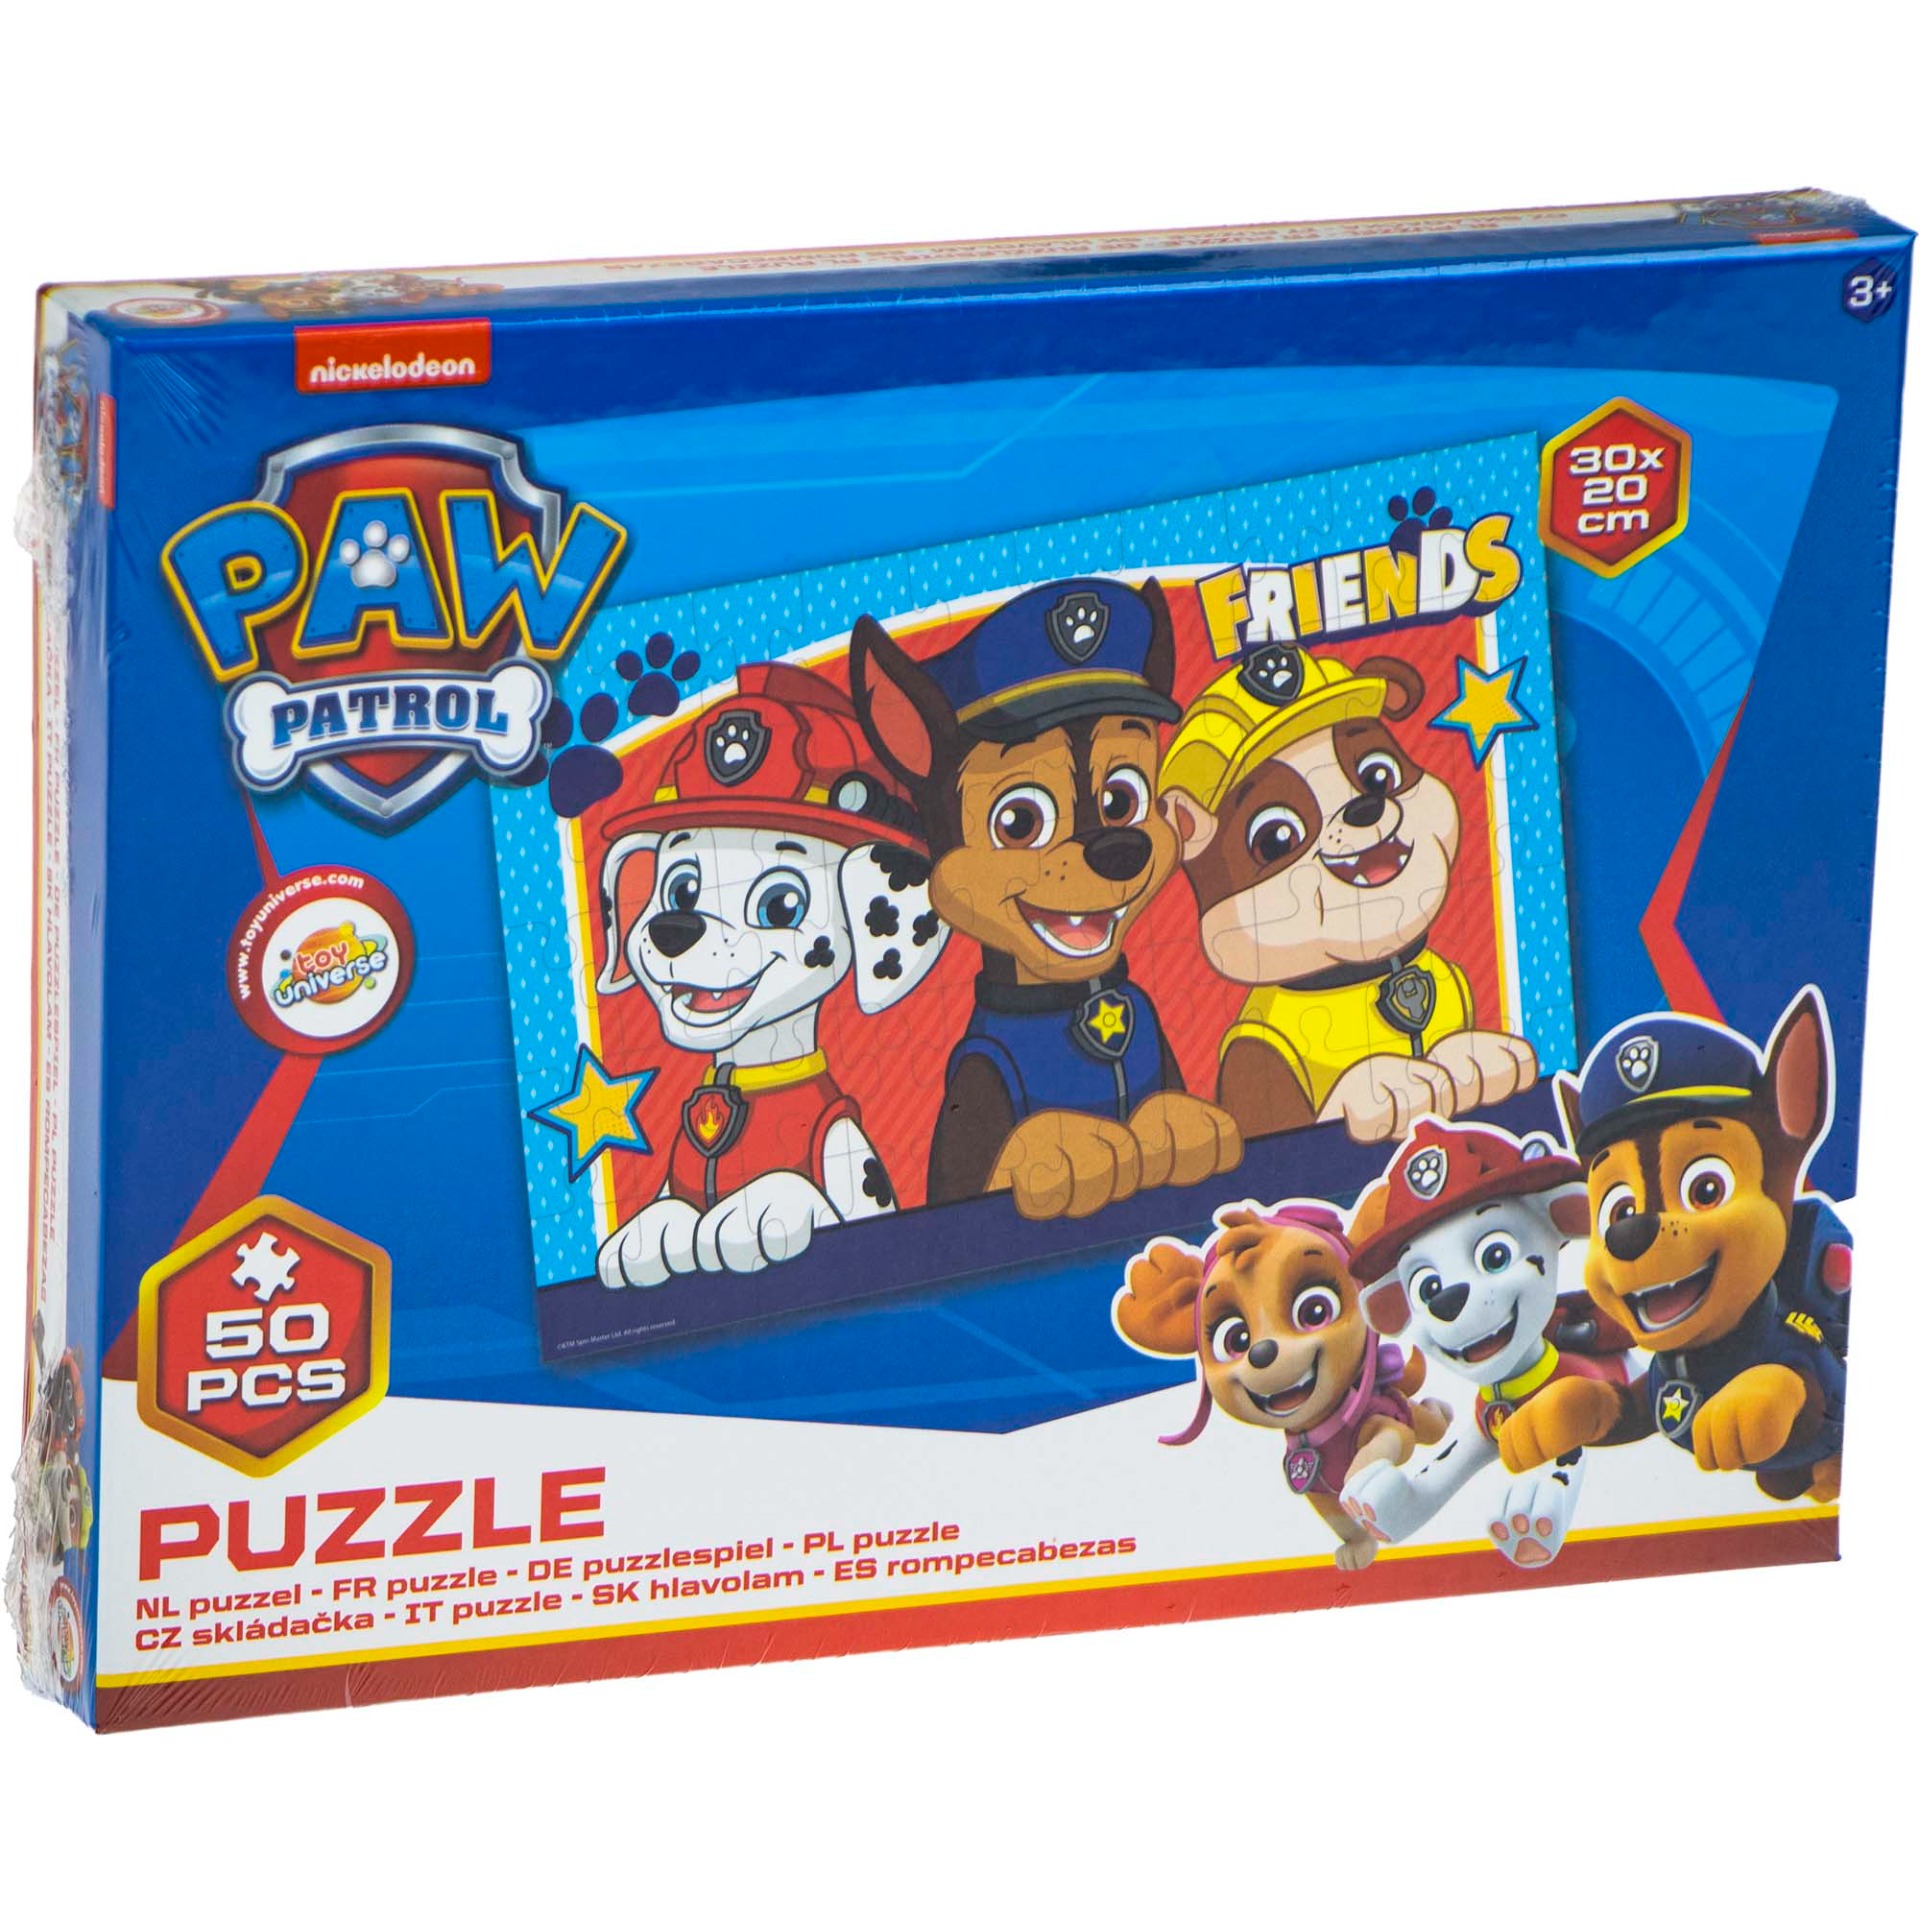 8720029024994-2paw-patrol-puzzle-wholesale-distributor